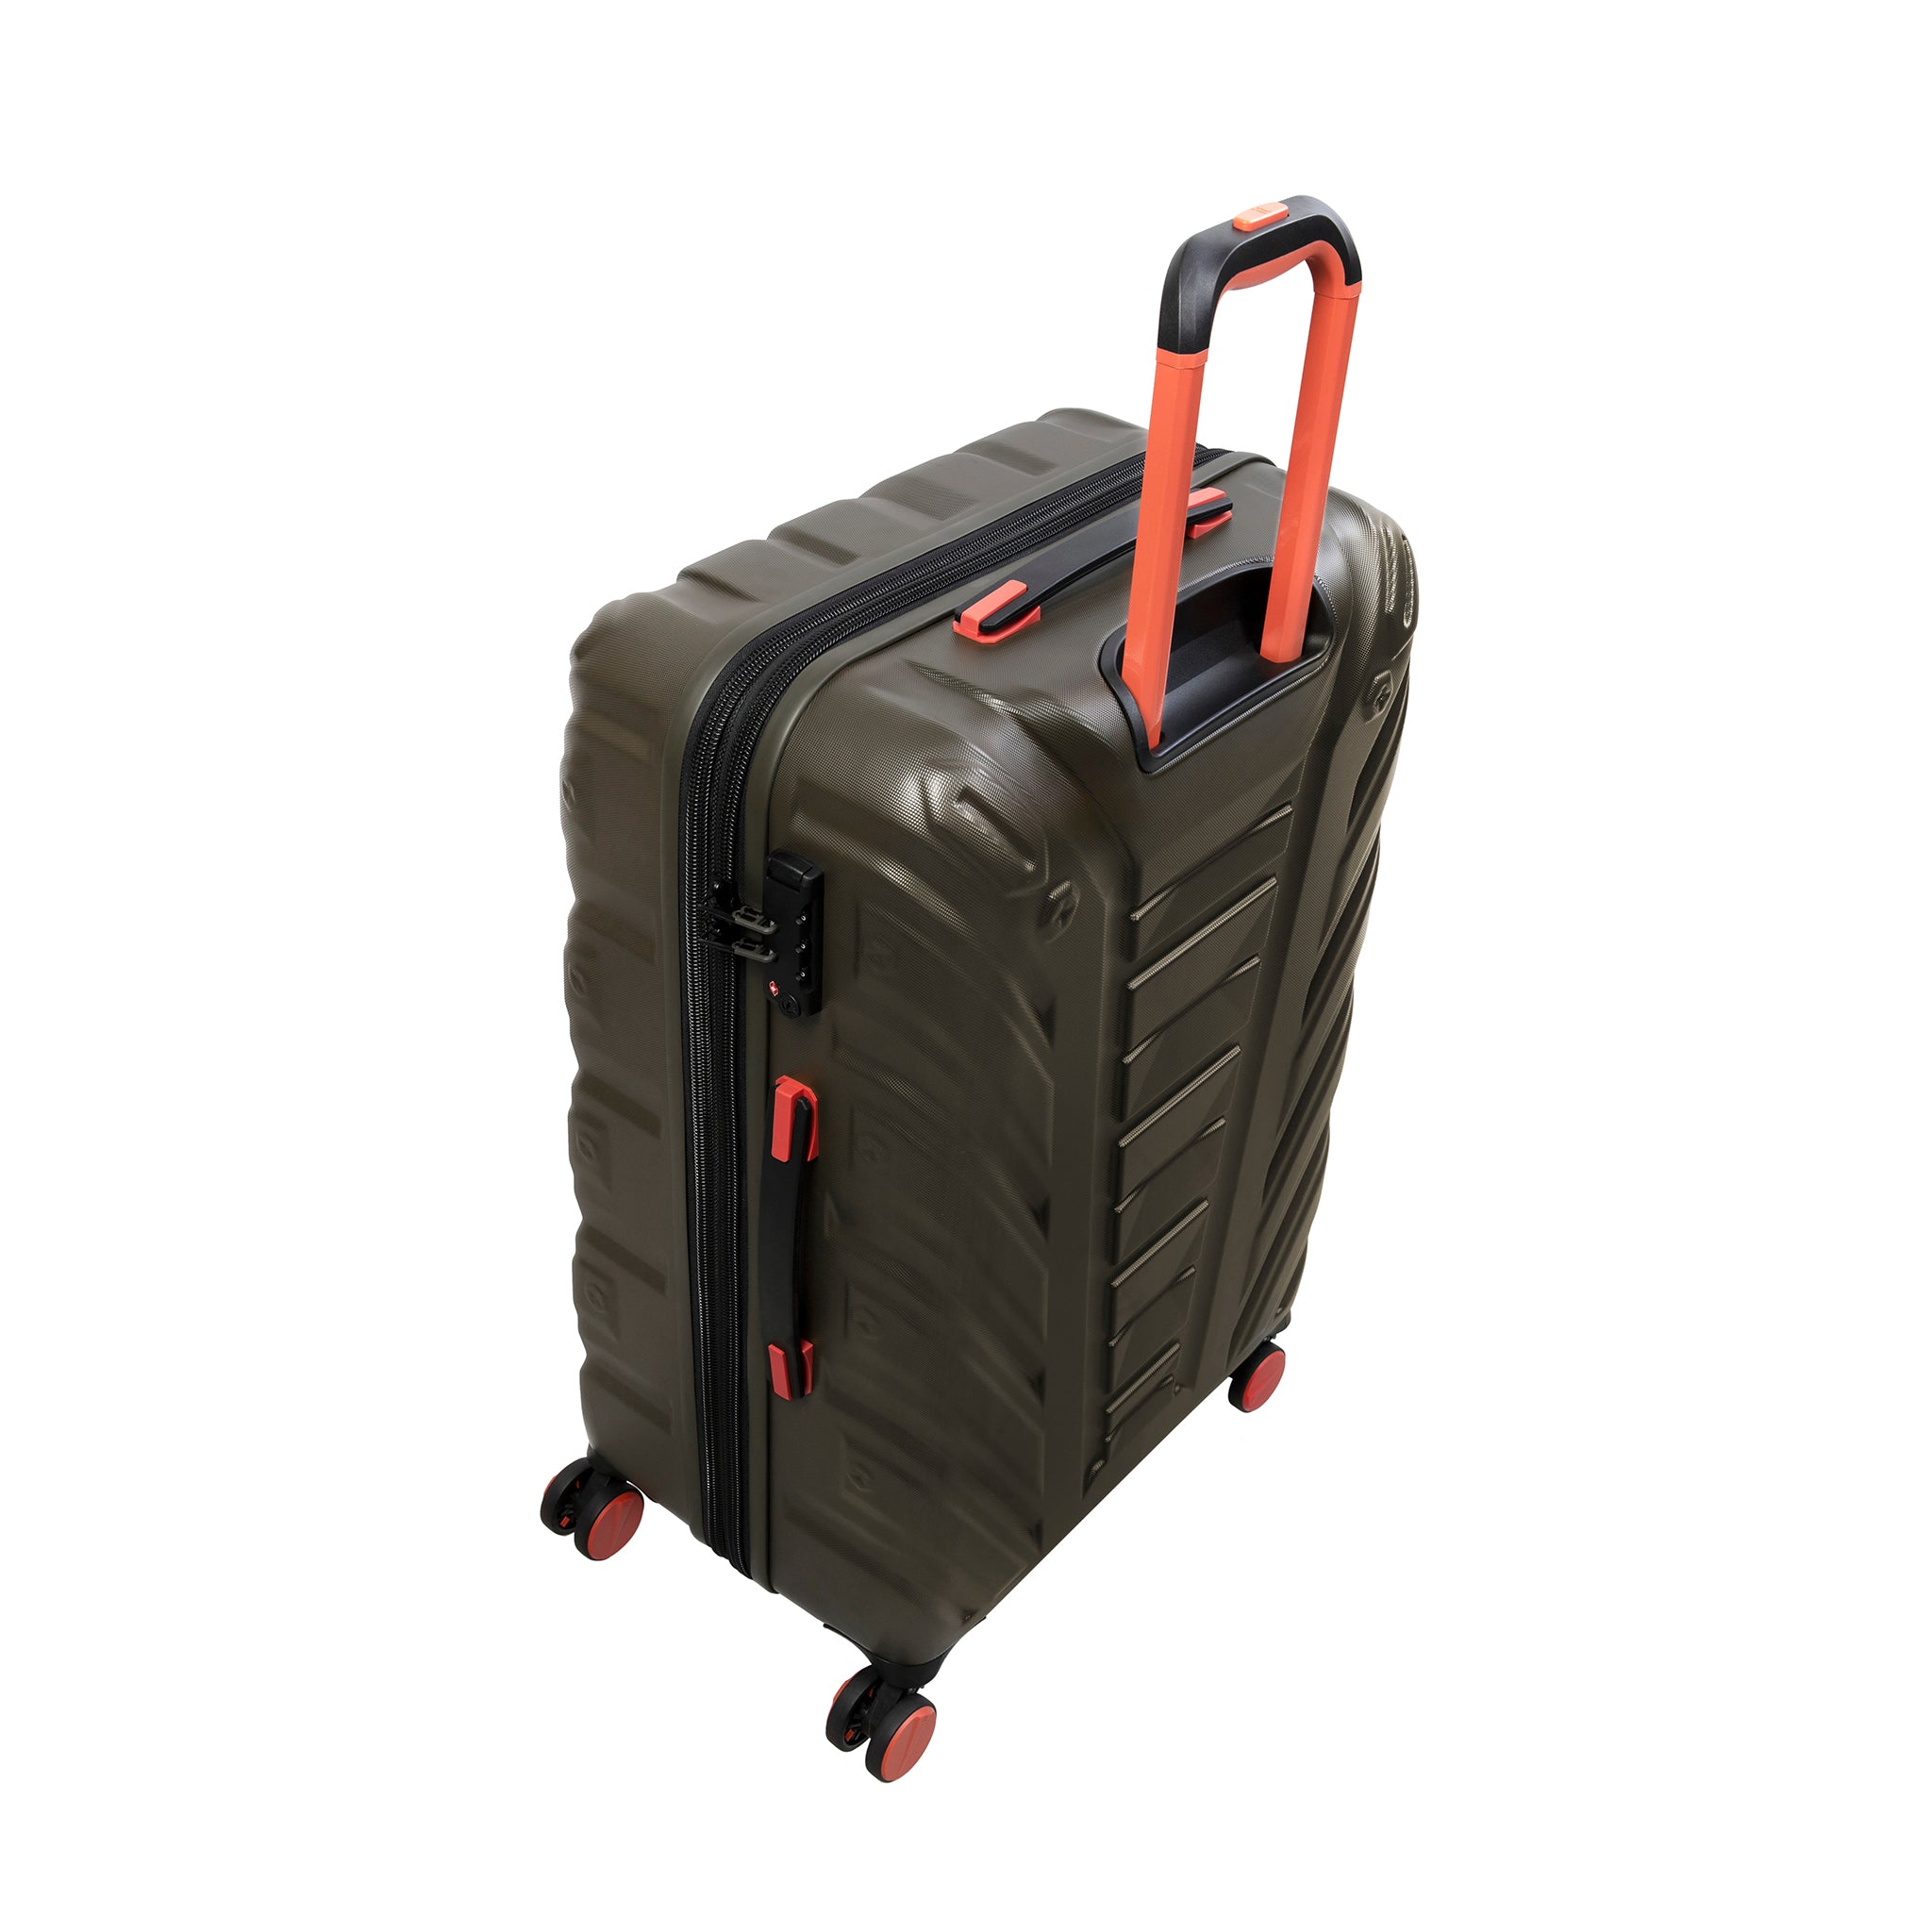 it Luggage | Escalate - 3pc Set in Dark Olive